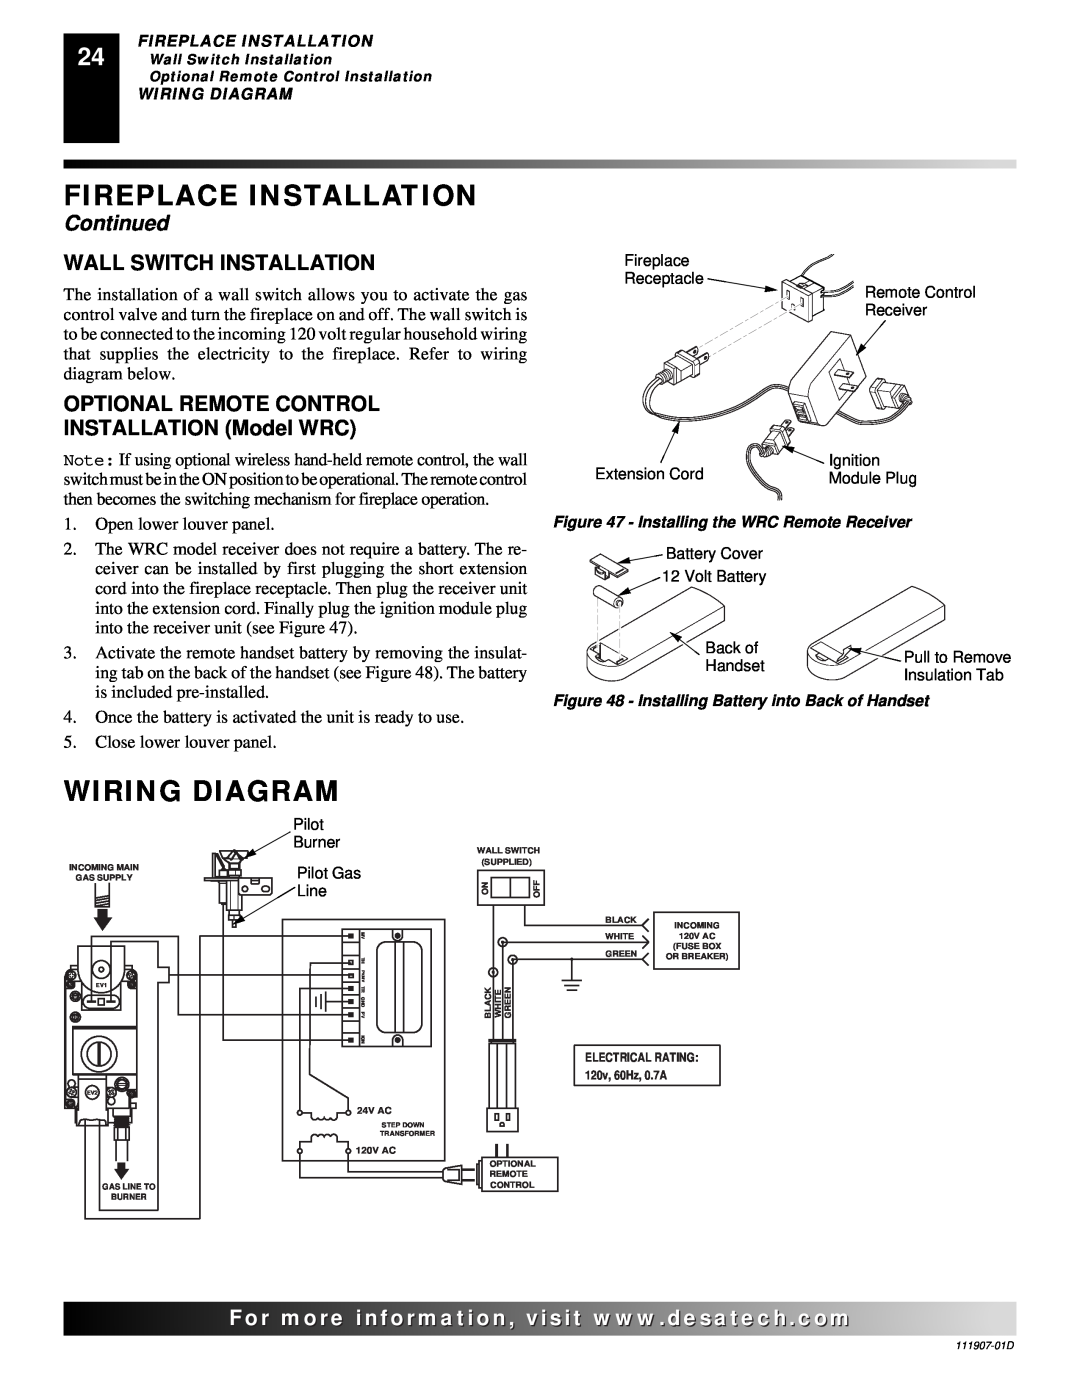 Desa VV42ENB(1), VV42EPB(1), V42EN-A Wiring Diagram, Fireplace Installation, Continued, Wall Switch Installation, For..com 